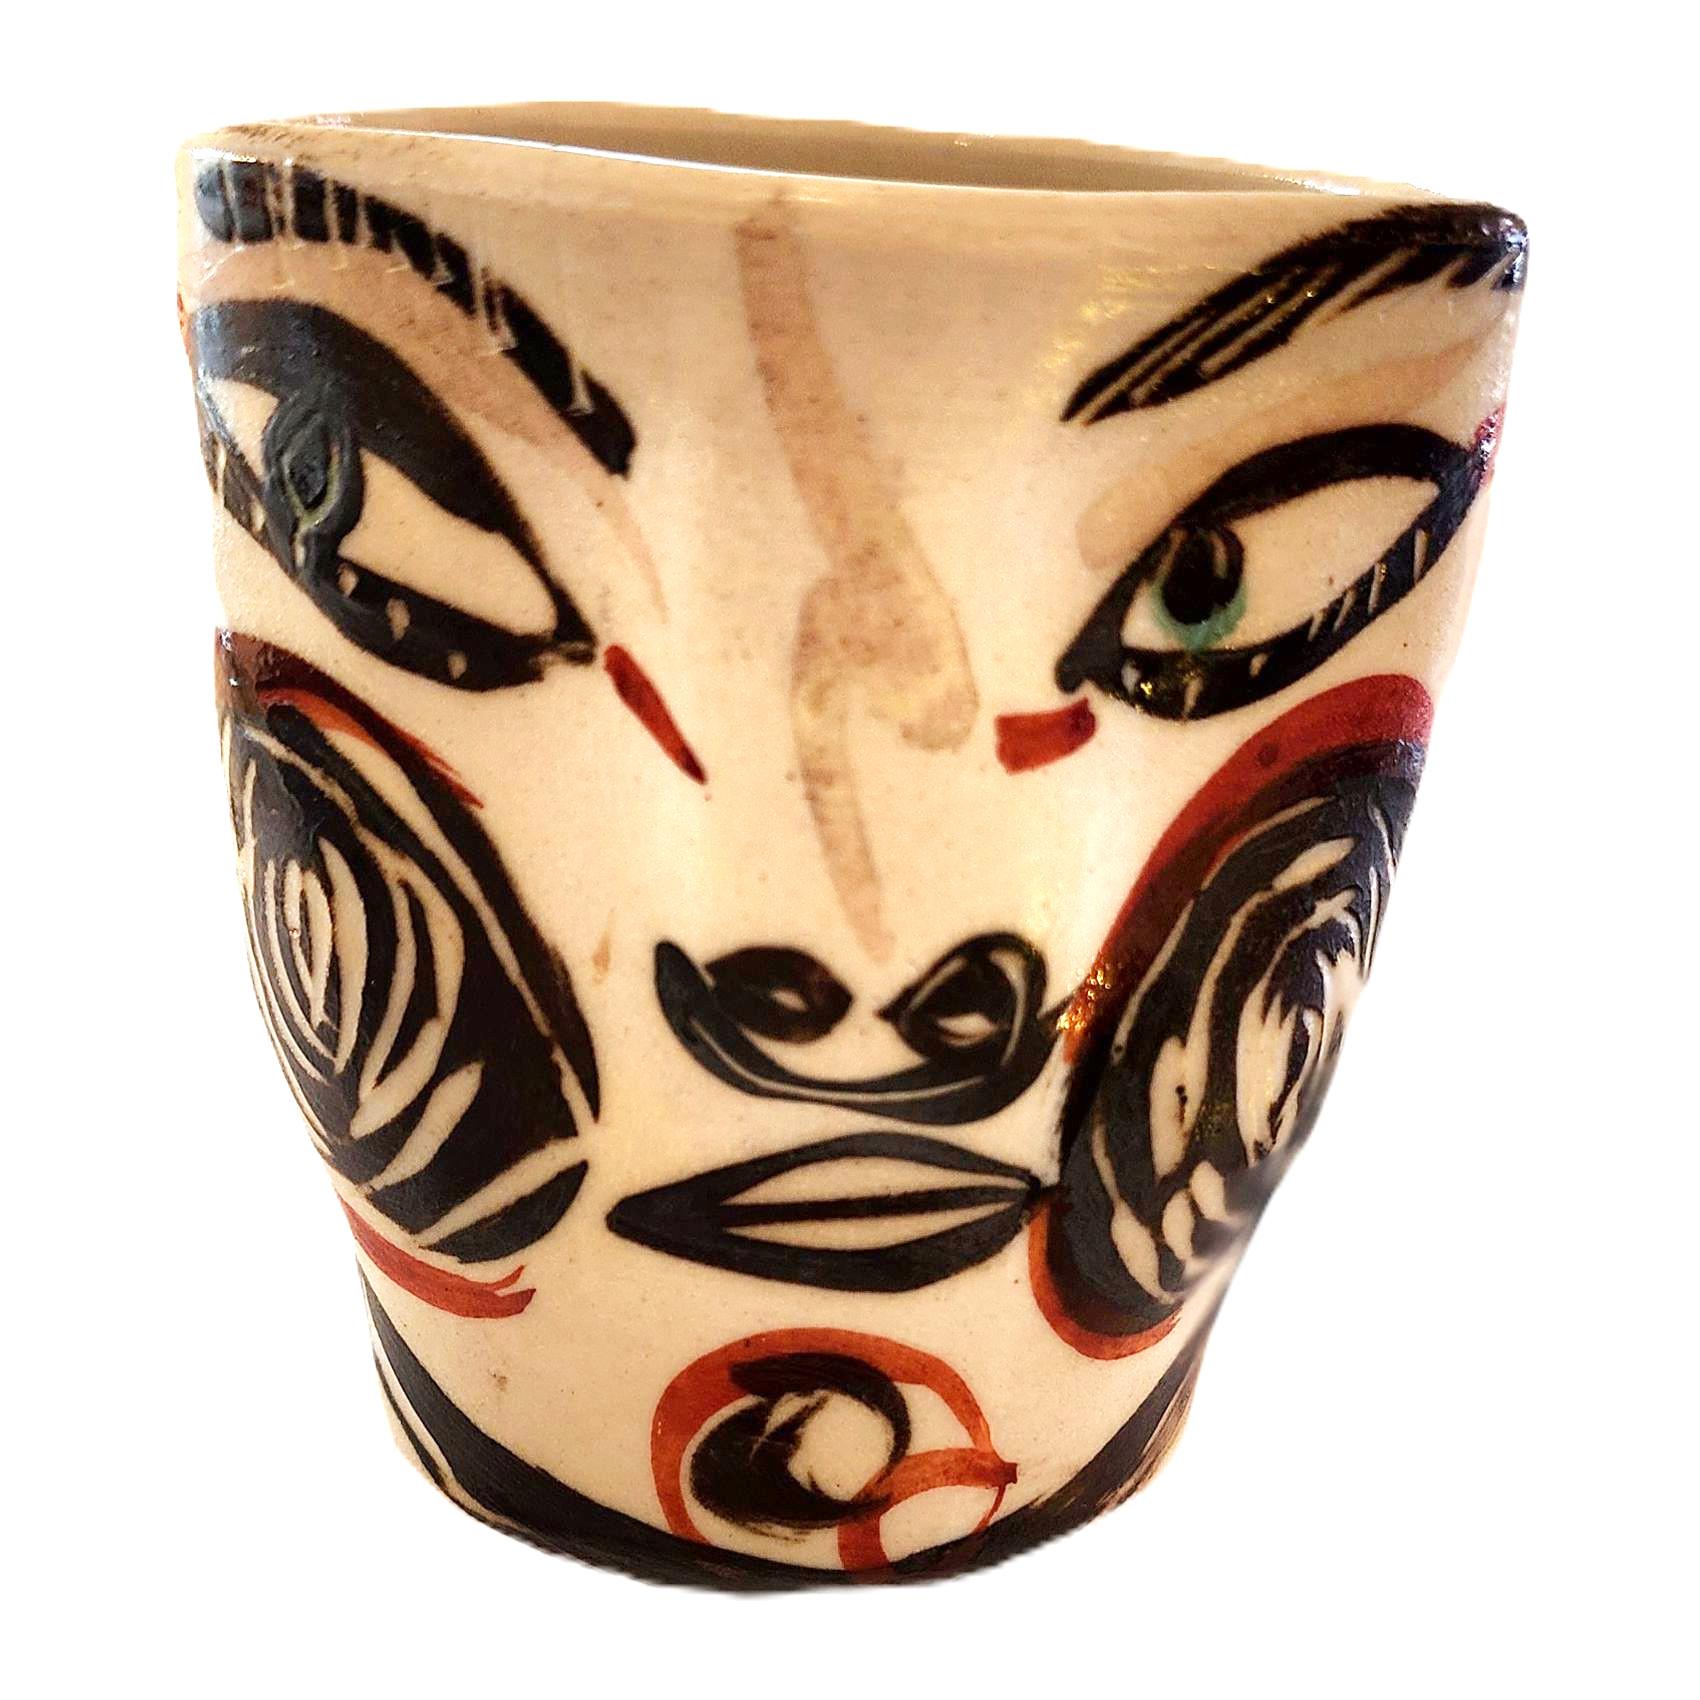 Akio Takamori Figurative Sculpture - Cup with Face (Modern Ceramics)